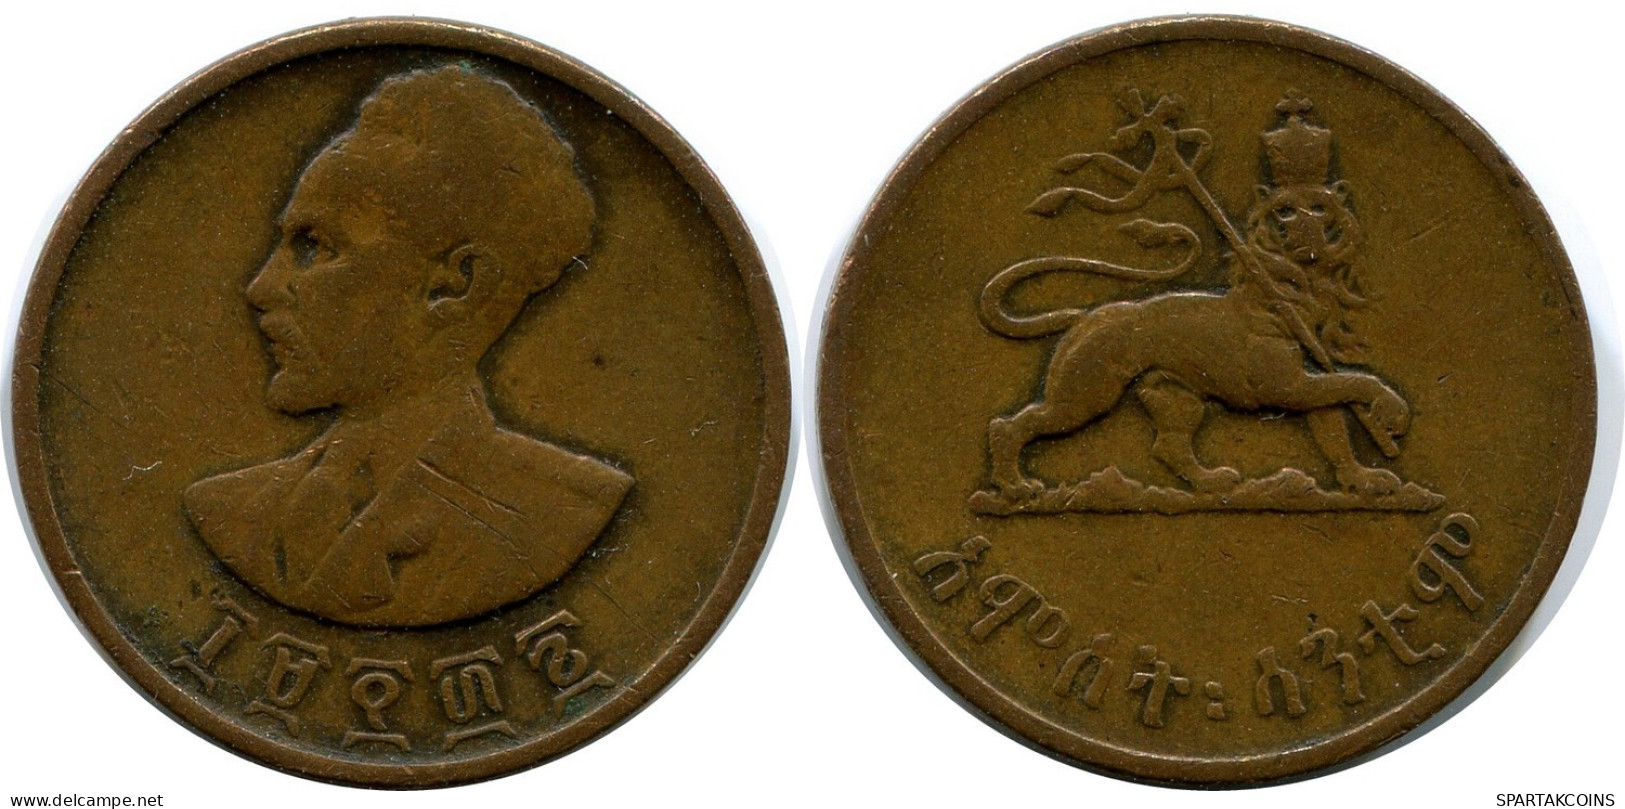 5 CENTS 1943-1944 ETHIOPIA Coin #AP877.U.A - Aethiopien